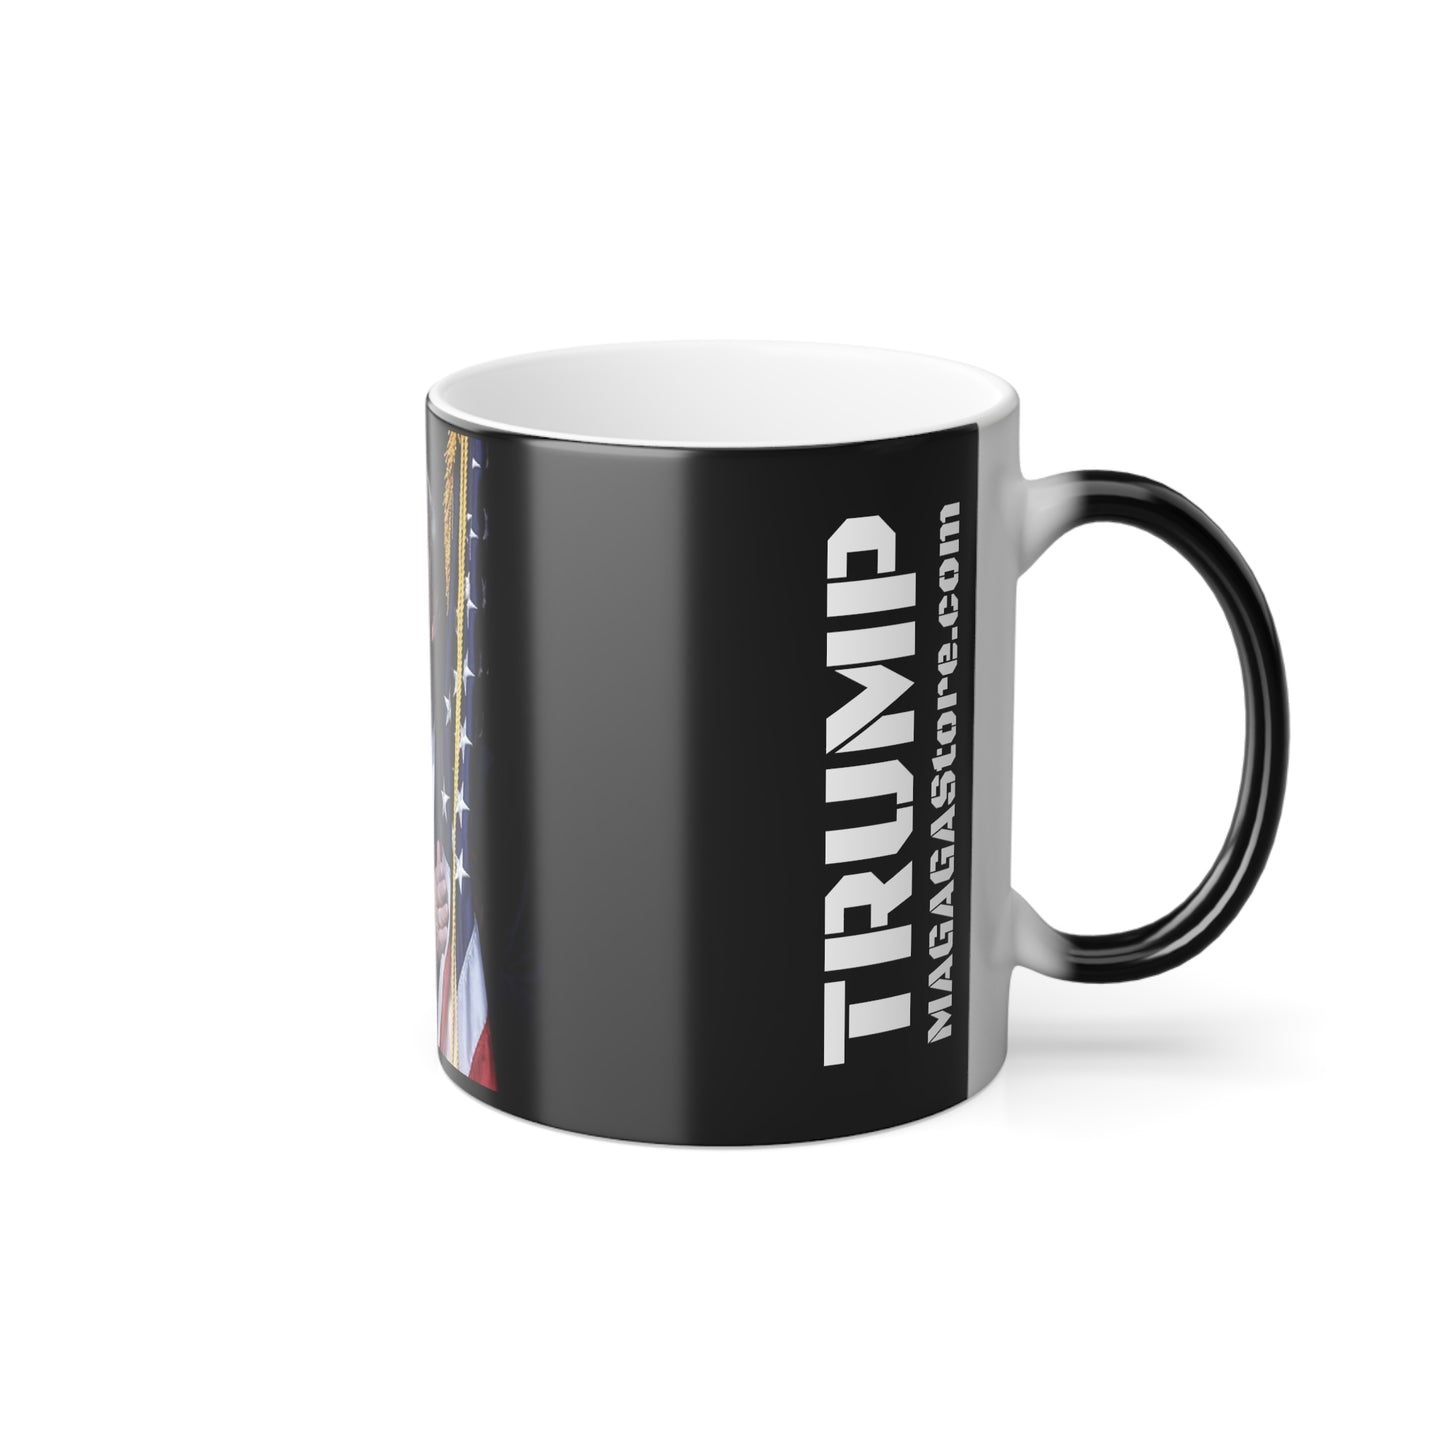 Color Morphing Trump loves America Heat Reacting Coffee Mug 11oz